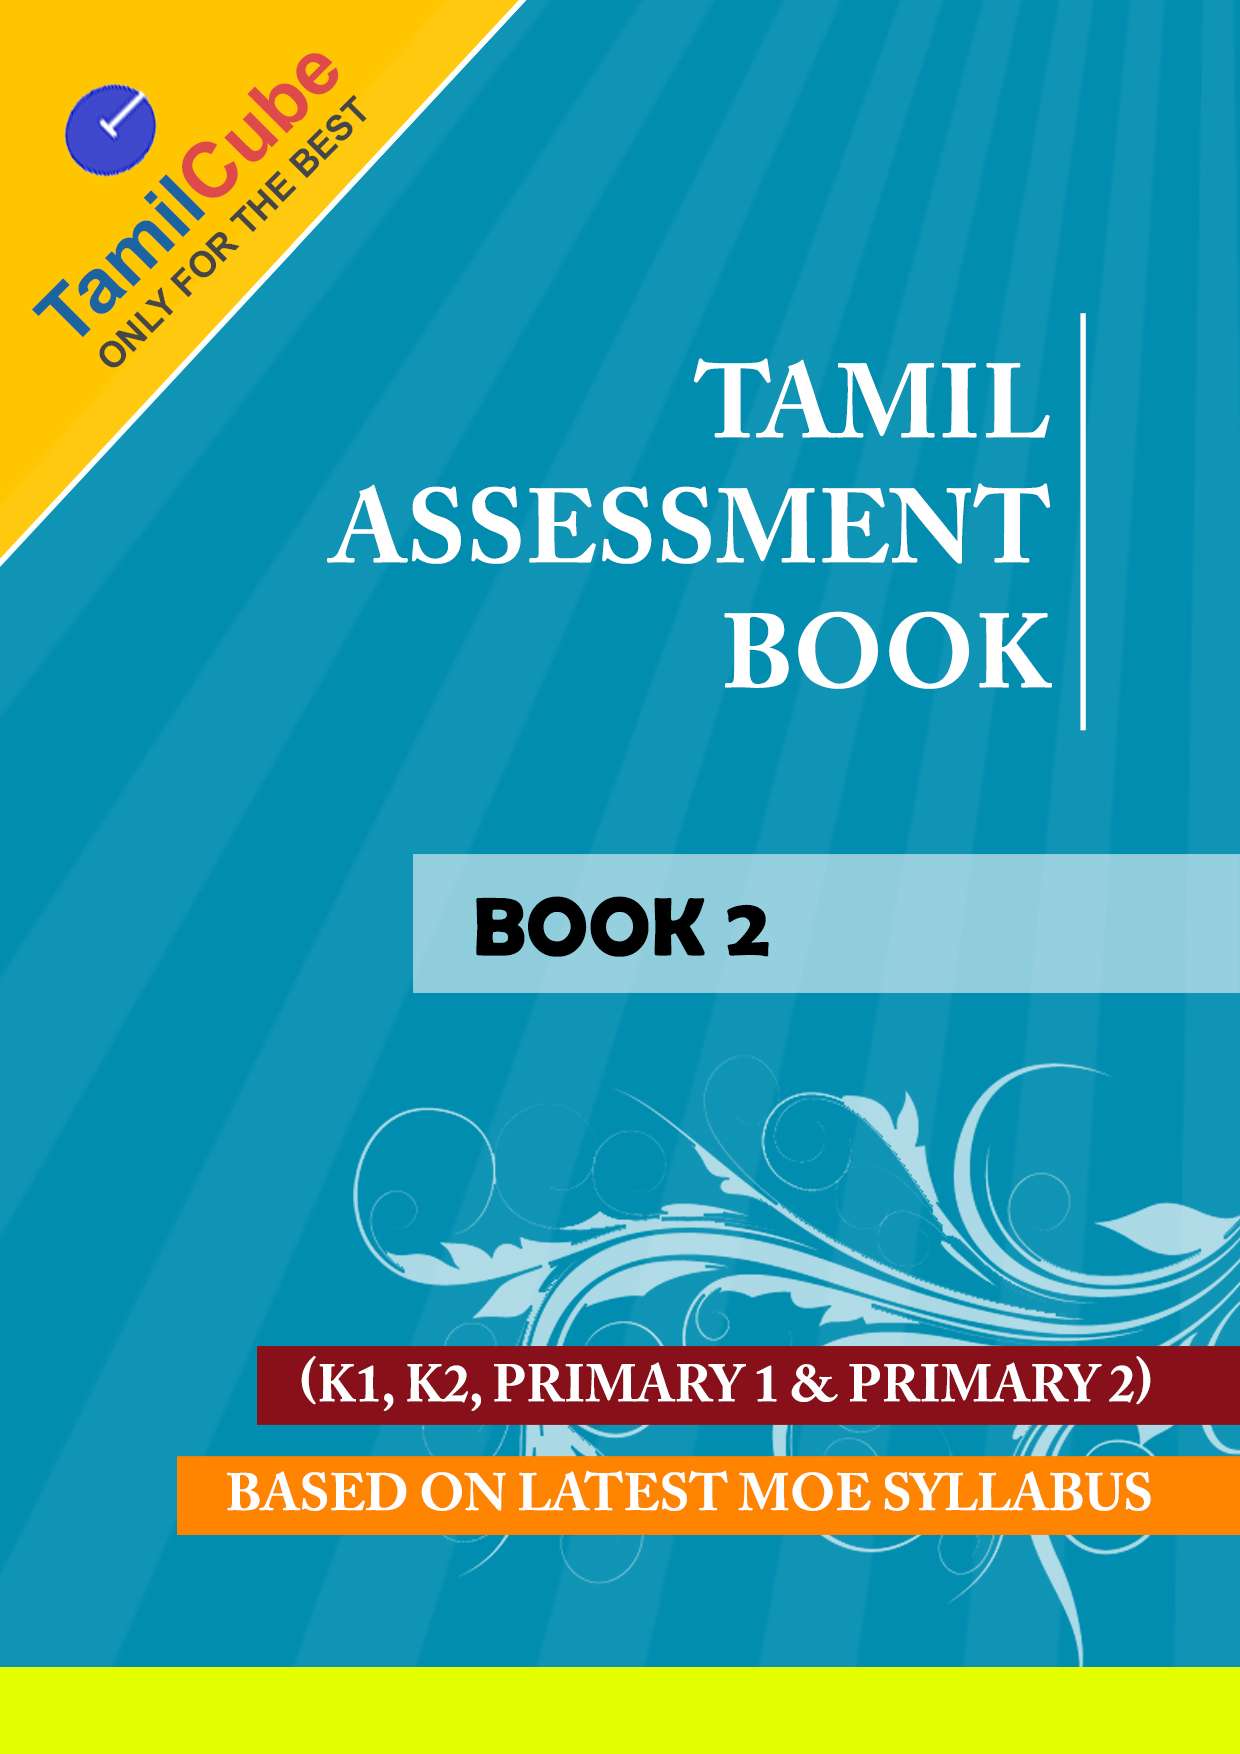 Tamil Books Pdf Free Download